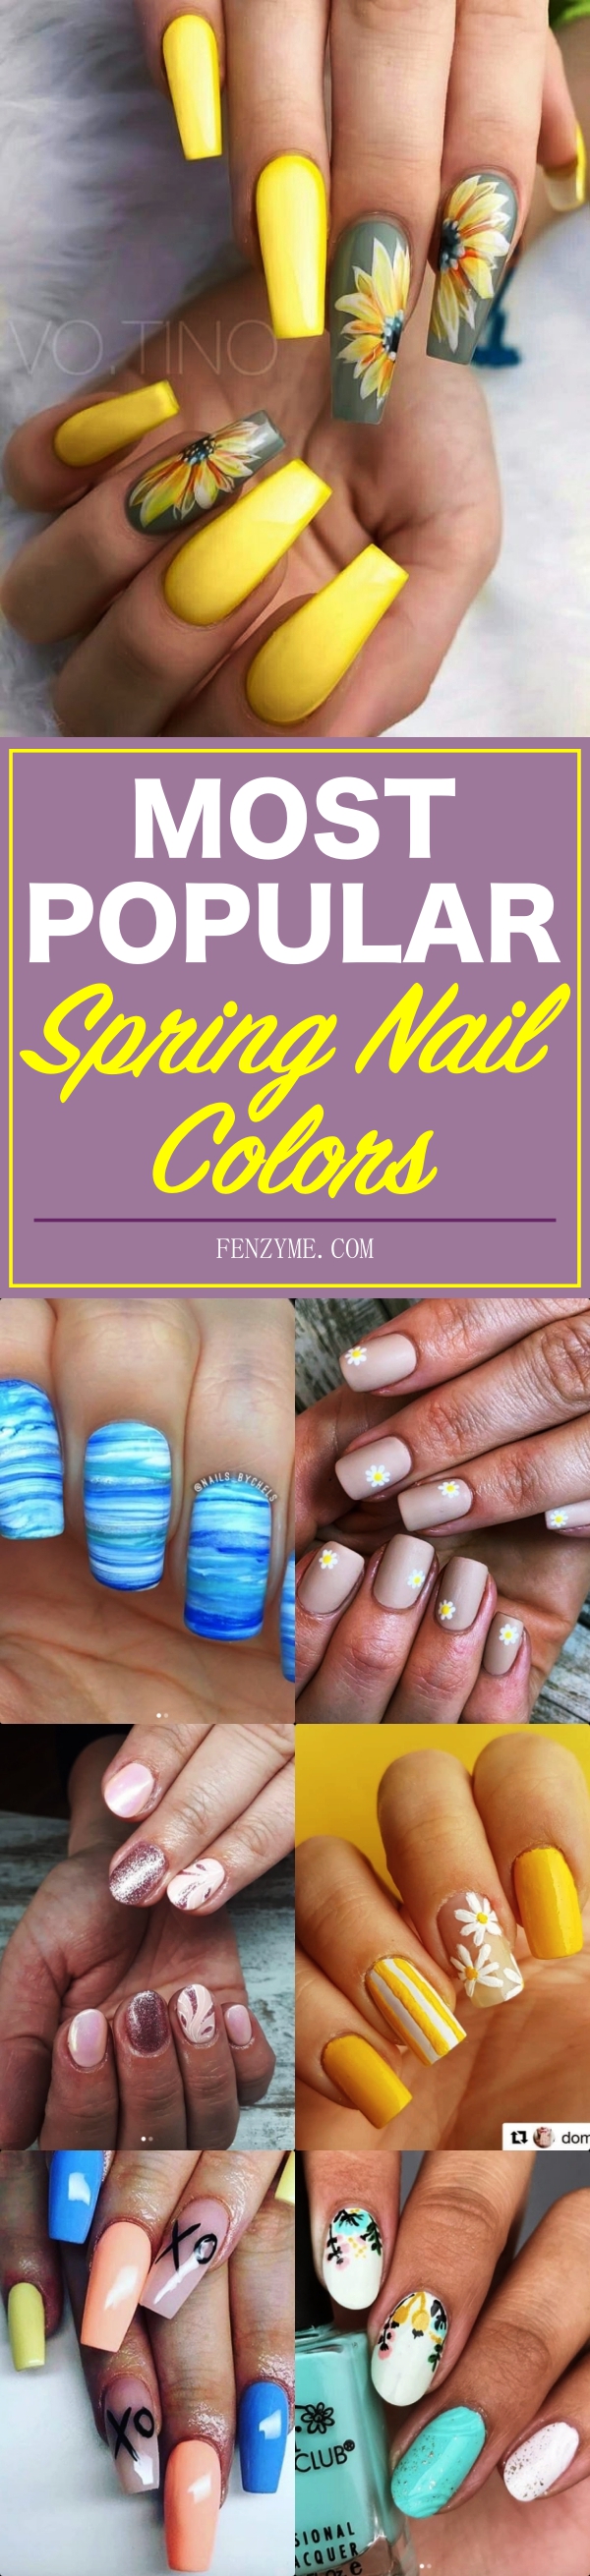 Popular Spring Nail Colors